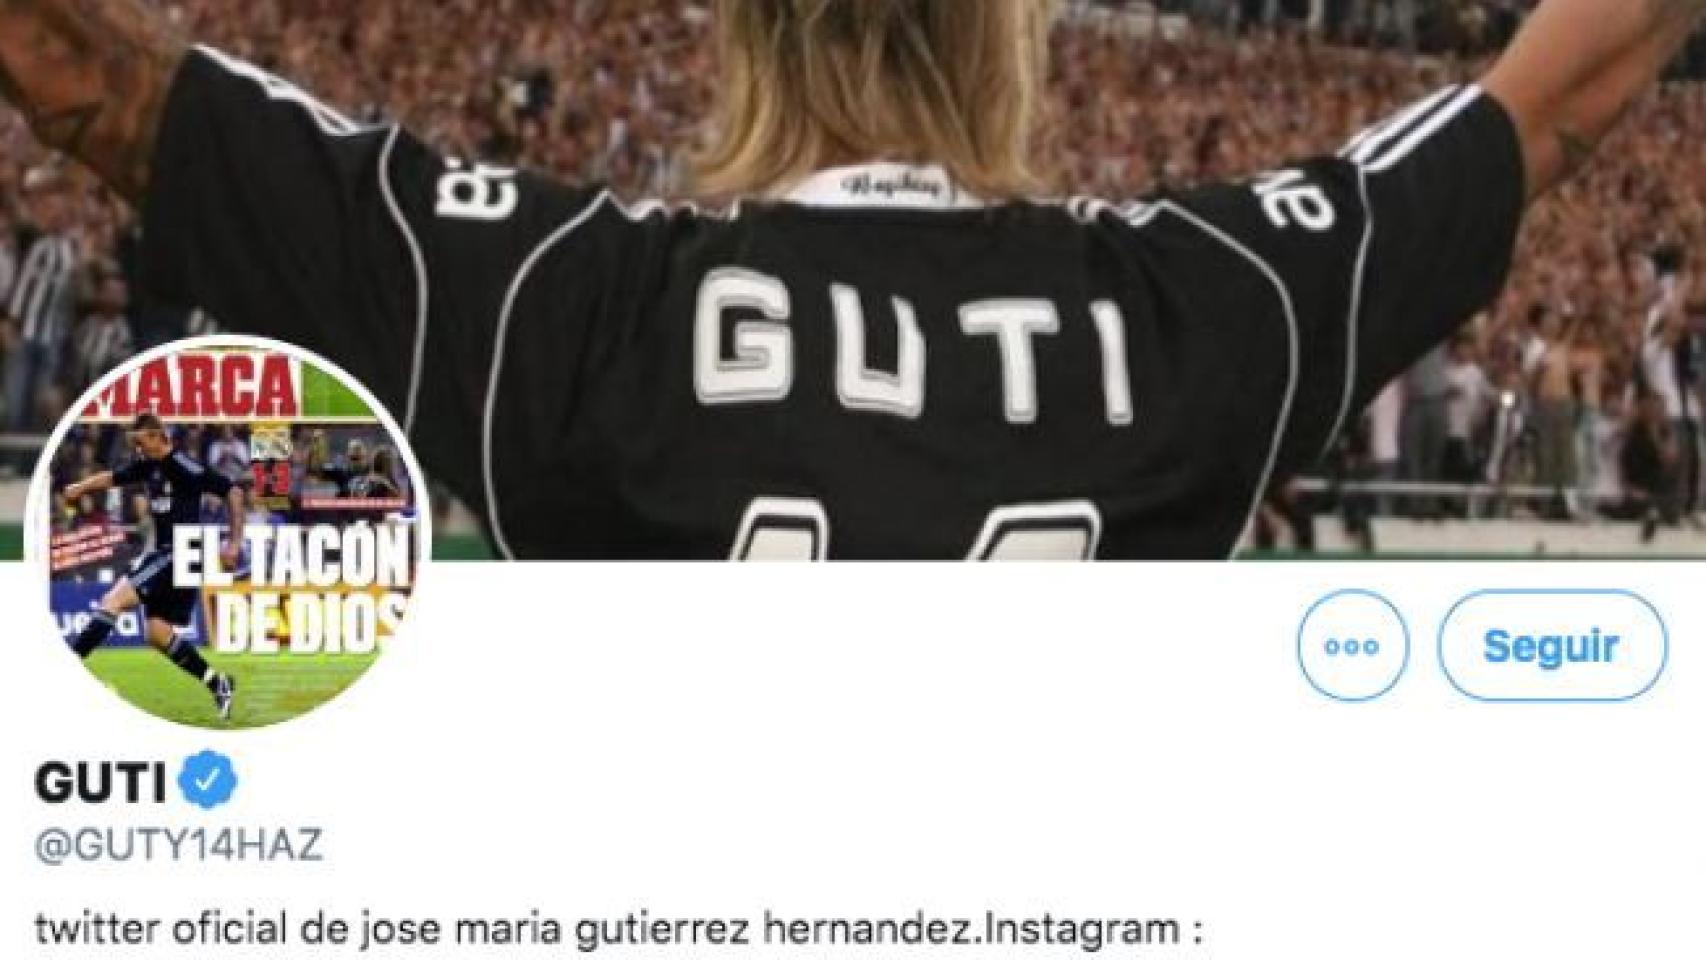 La cuenta de Twitter de Guti